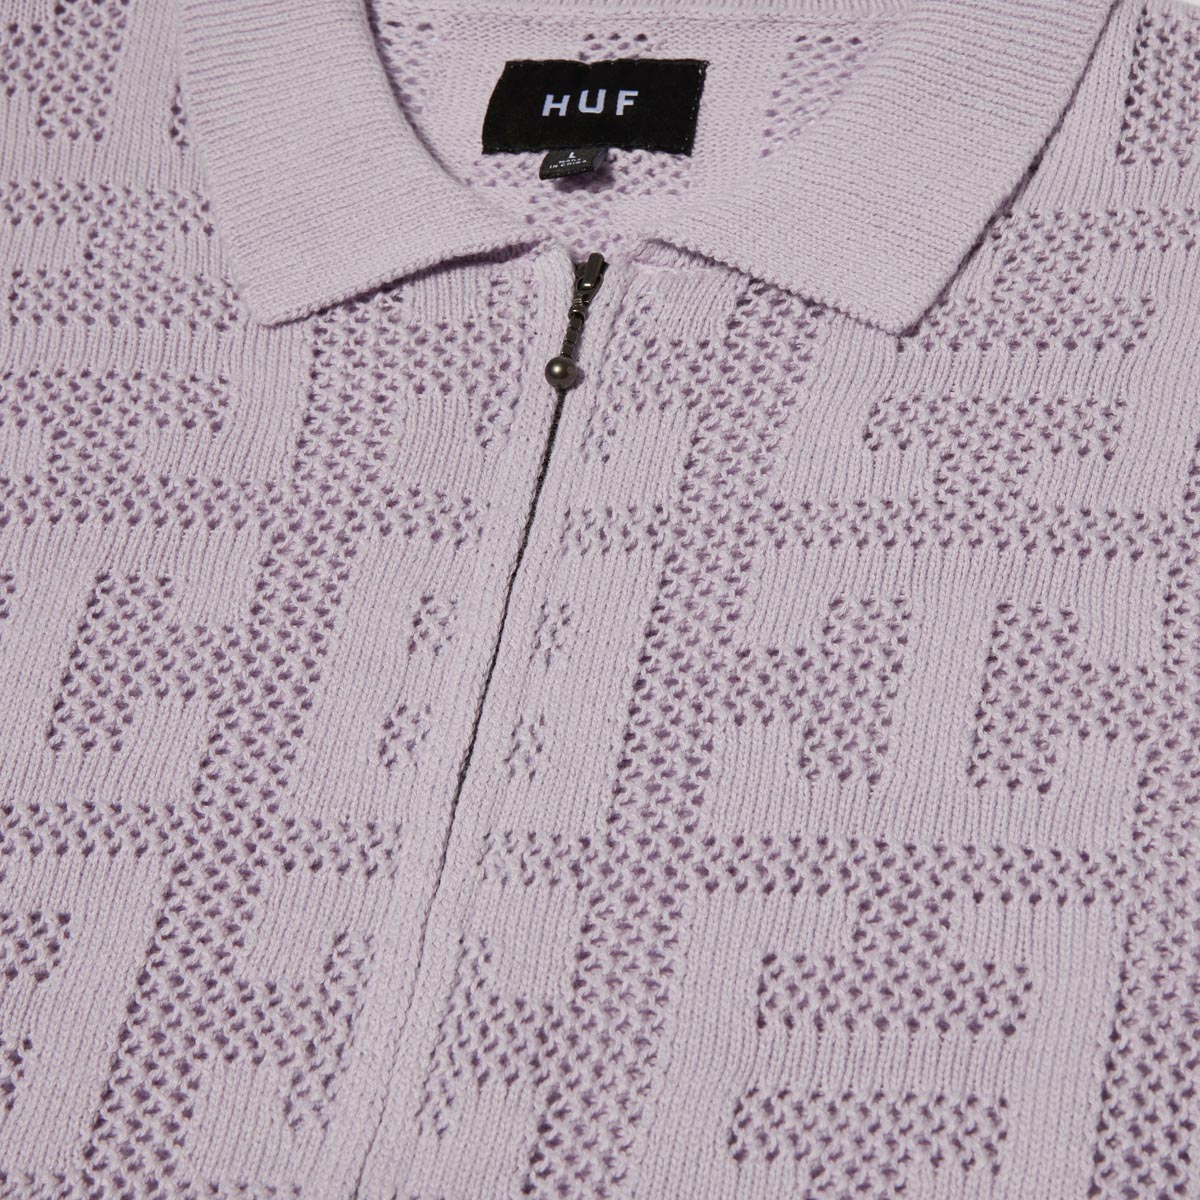 HUF Monogram Jacquard Zip Sweater - Lavender image 3